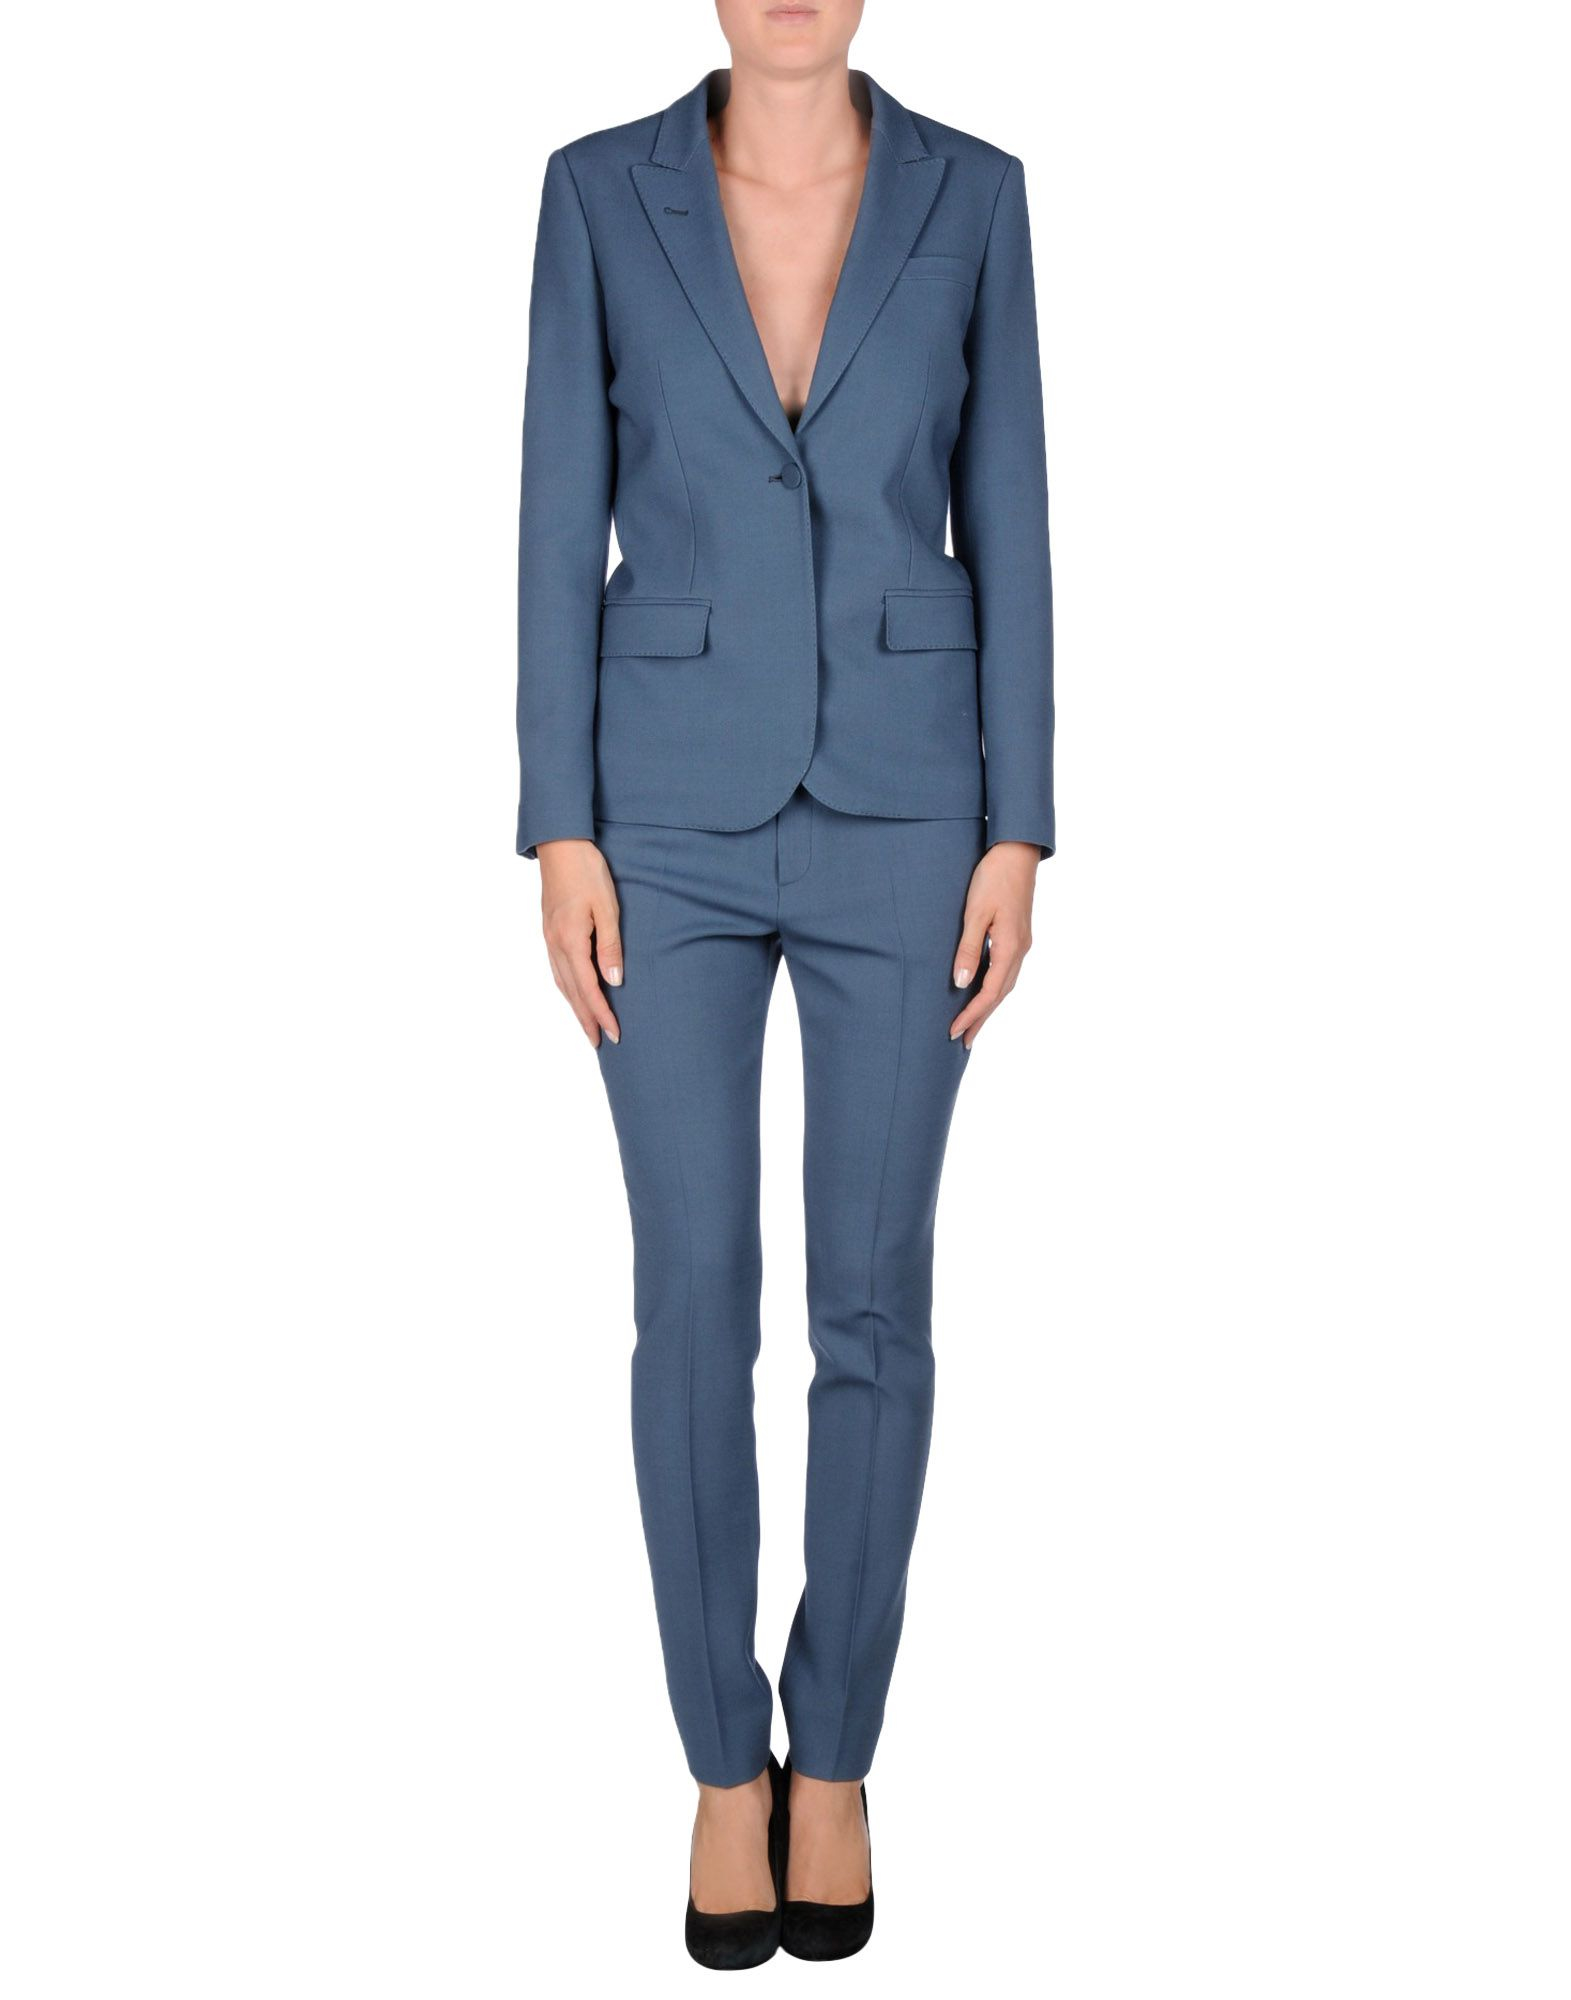 Gucci Women's Suit in Blue | Lyst